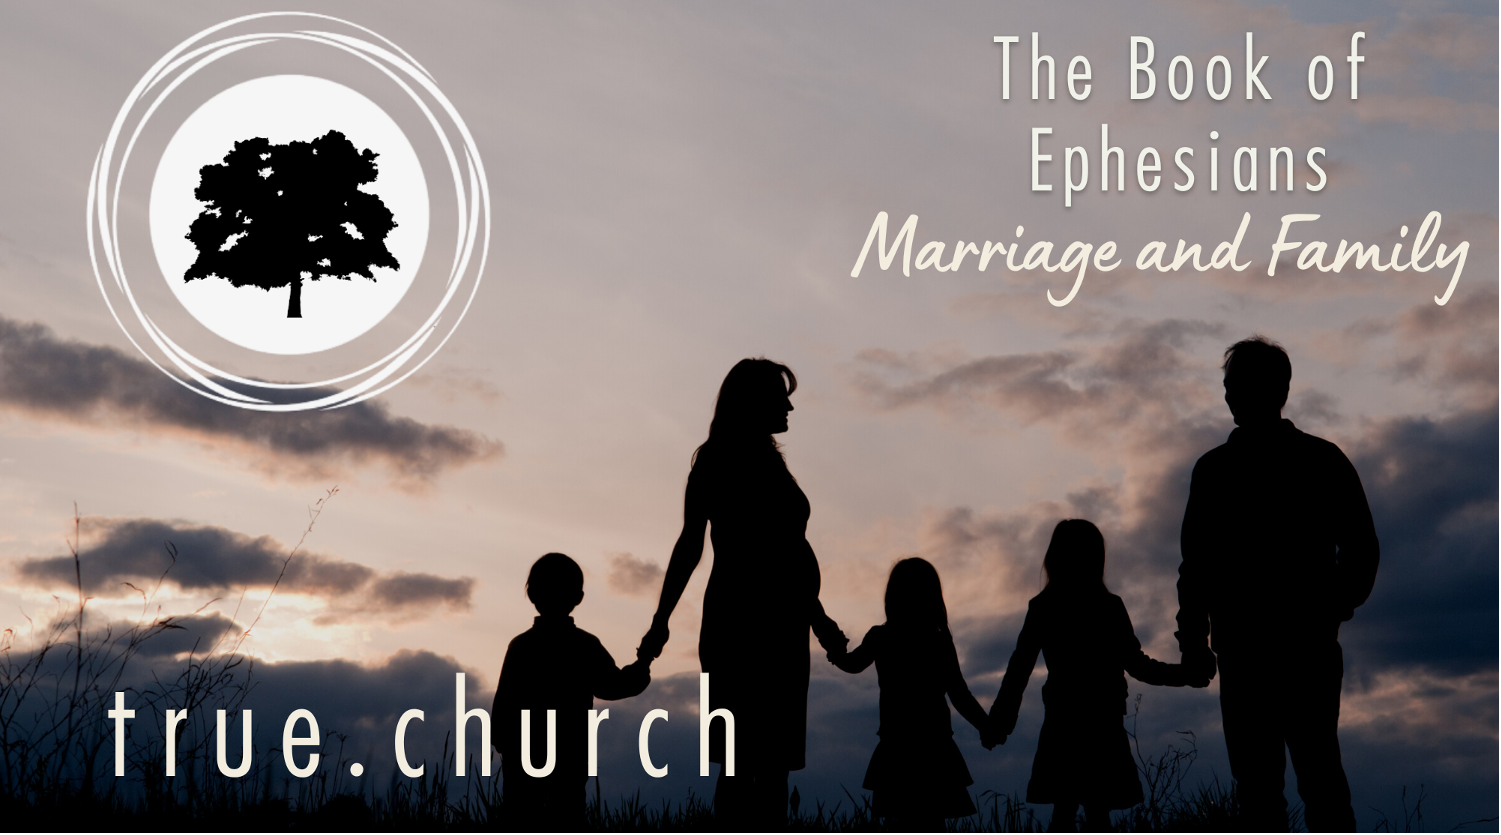 Eph marriage family smaller